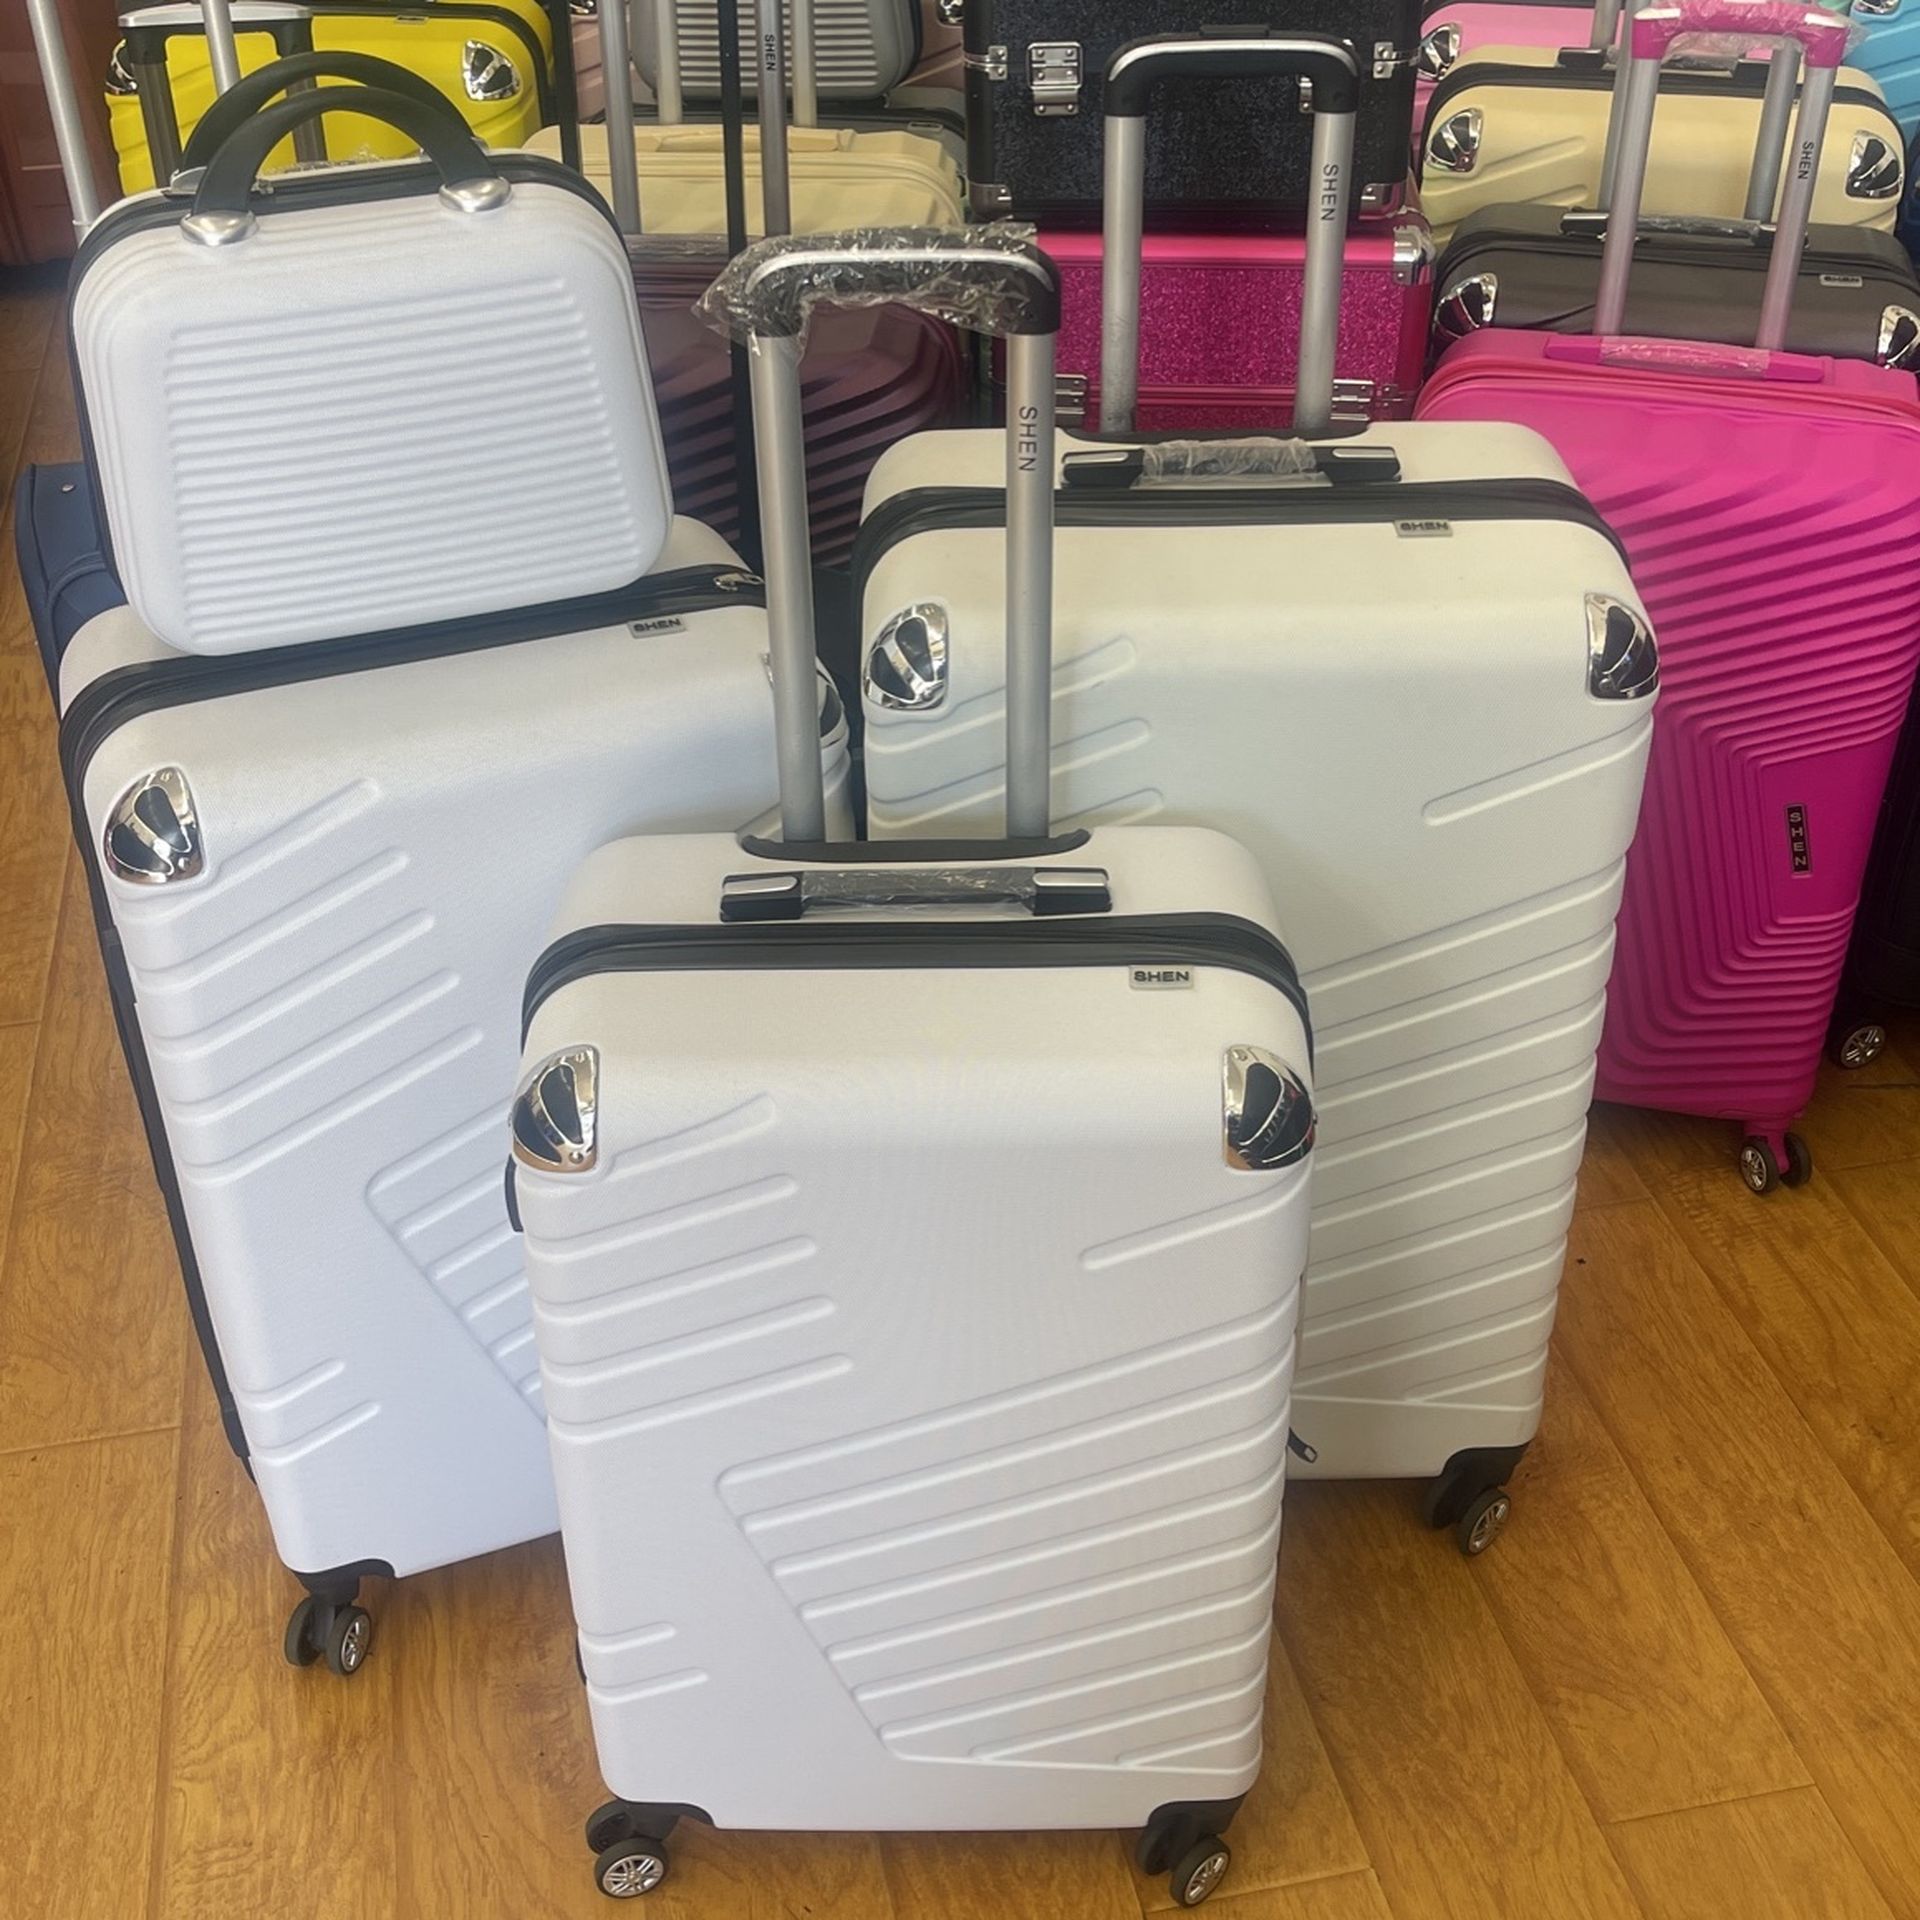 MCLLIN 3 piece luggage set for Sale in La Verne, CA - OfferUp